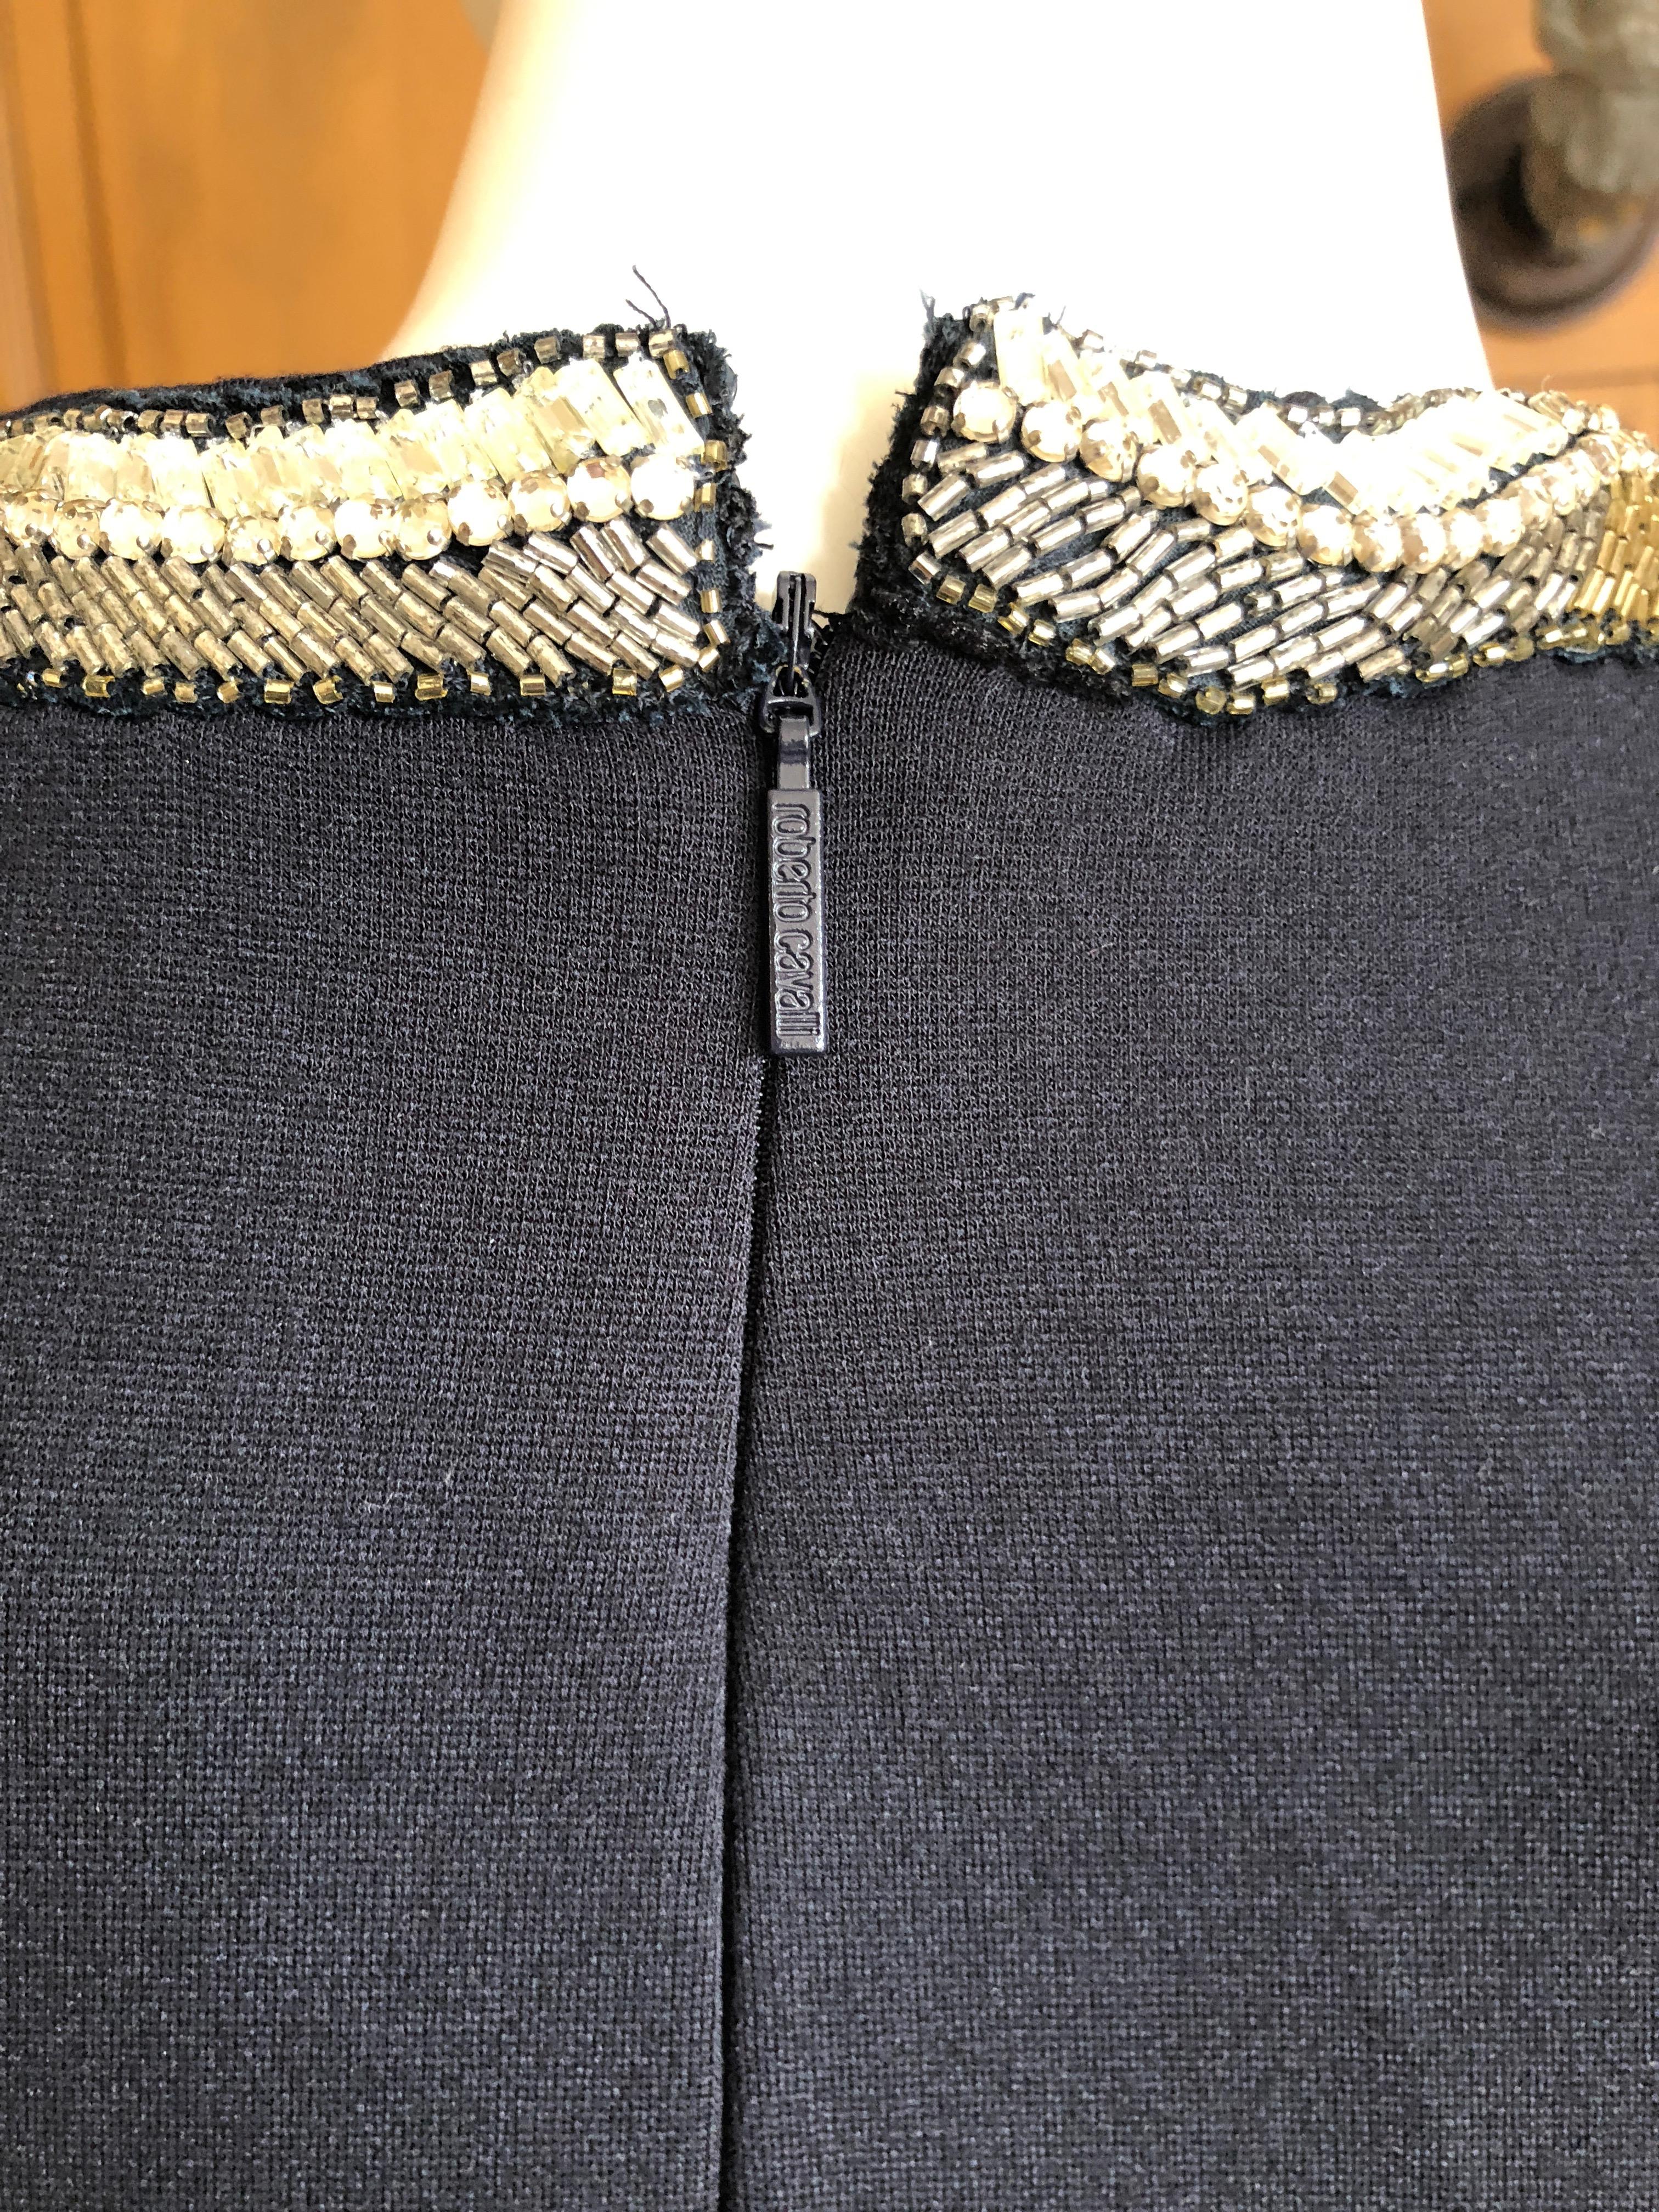 Roberto Cavalli Vintage Black Bodycon Dress w Crystal Embellished Snake Collar For Sale 3